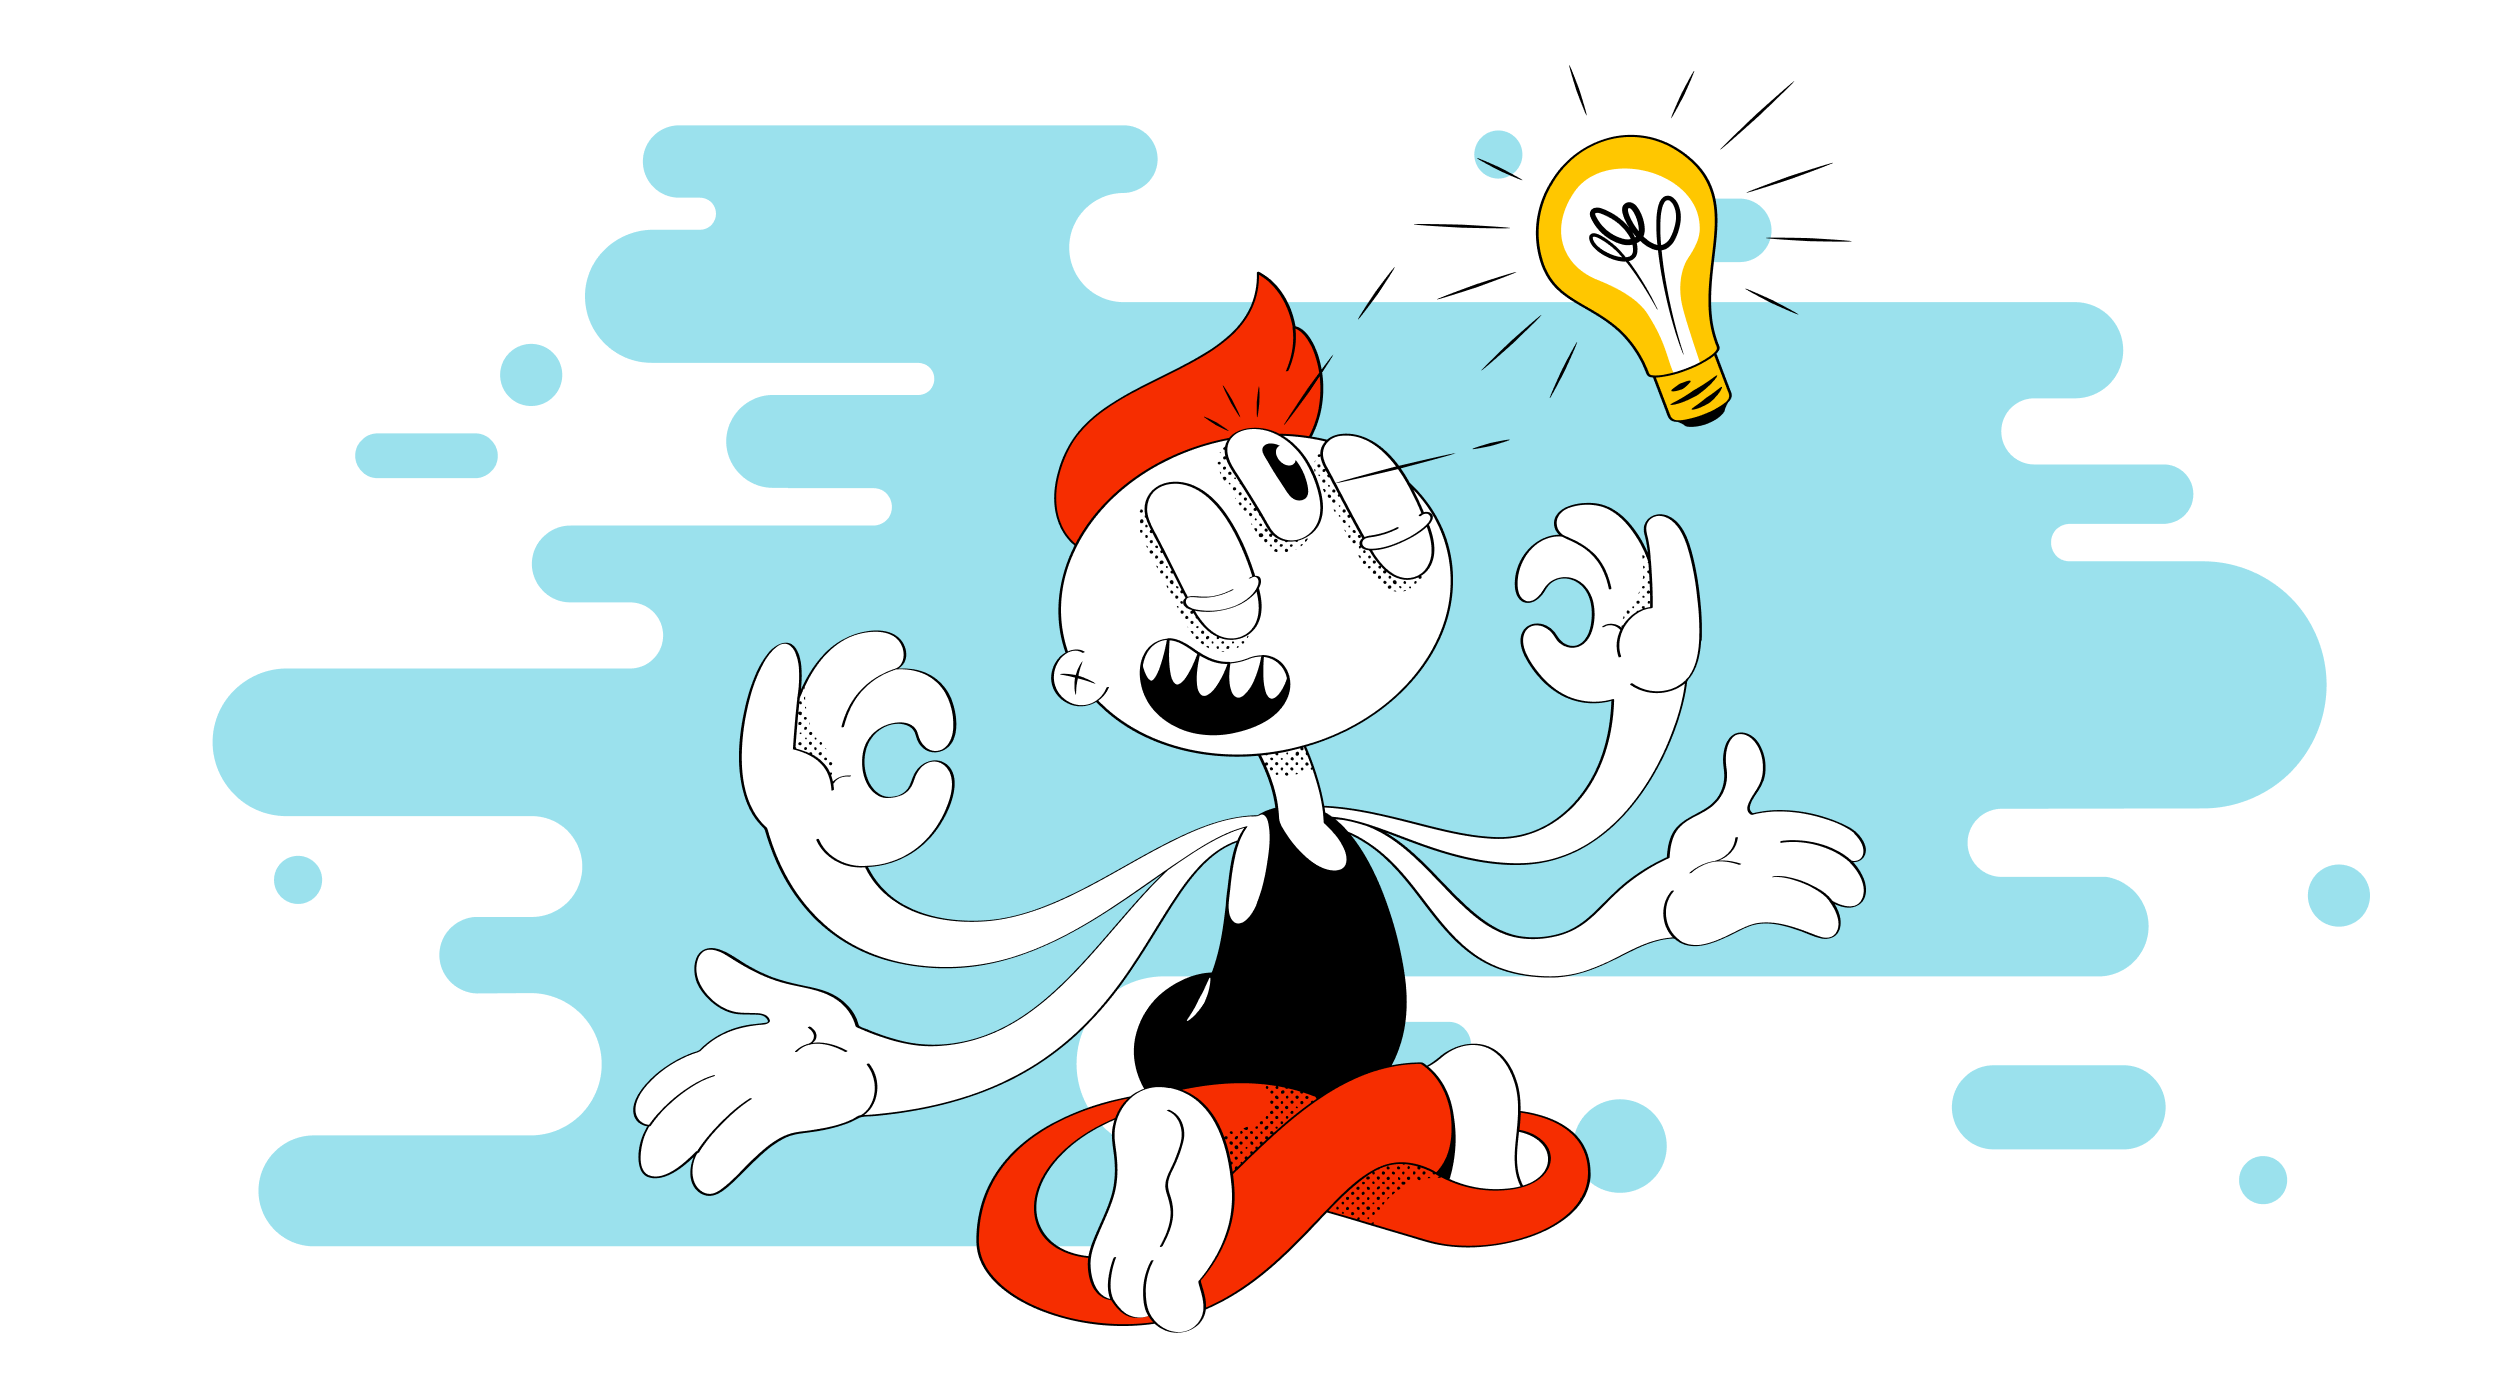 Cartoon person seeing an idea lightbulb in their mind's eye on a light blue cloud background